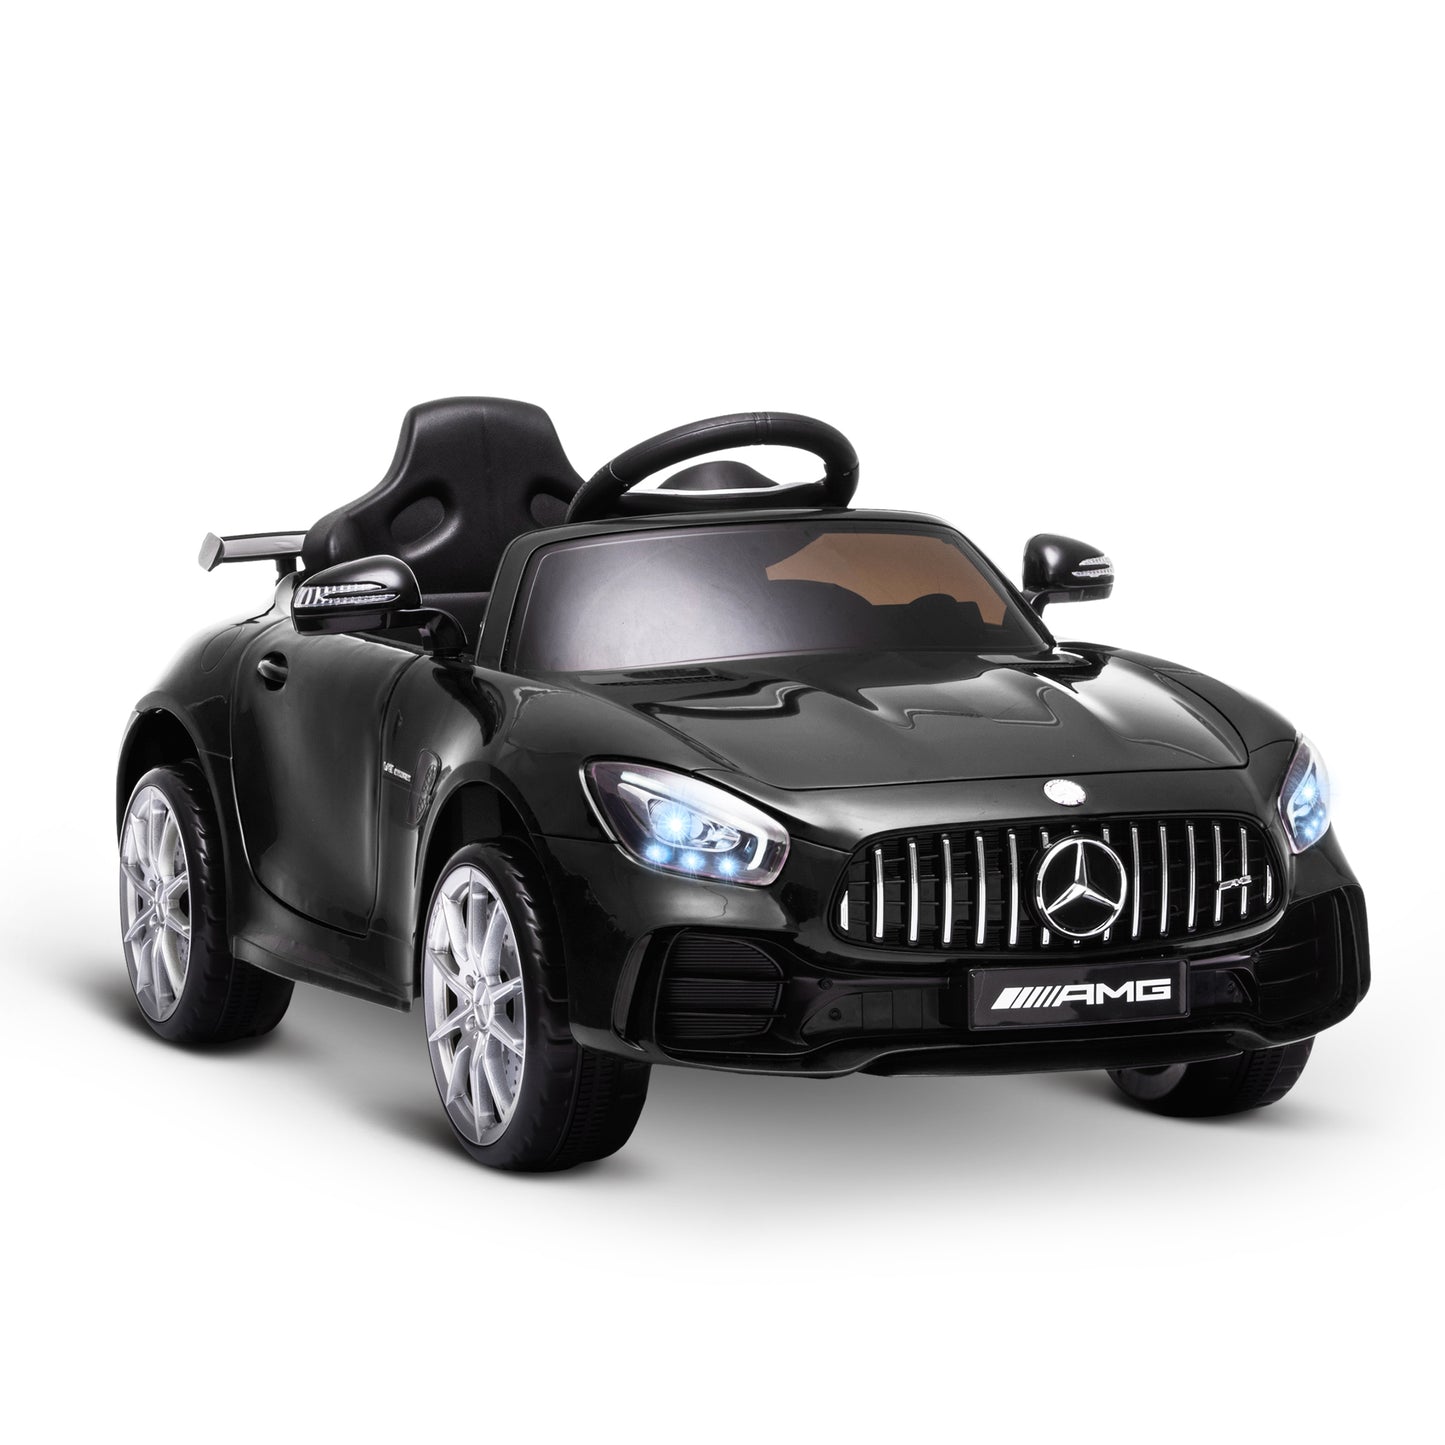 HOMCOM Benz GTR 12V Kids Electric Car Ride On Toy w/ Remote Control MP3